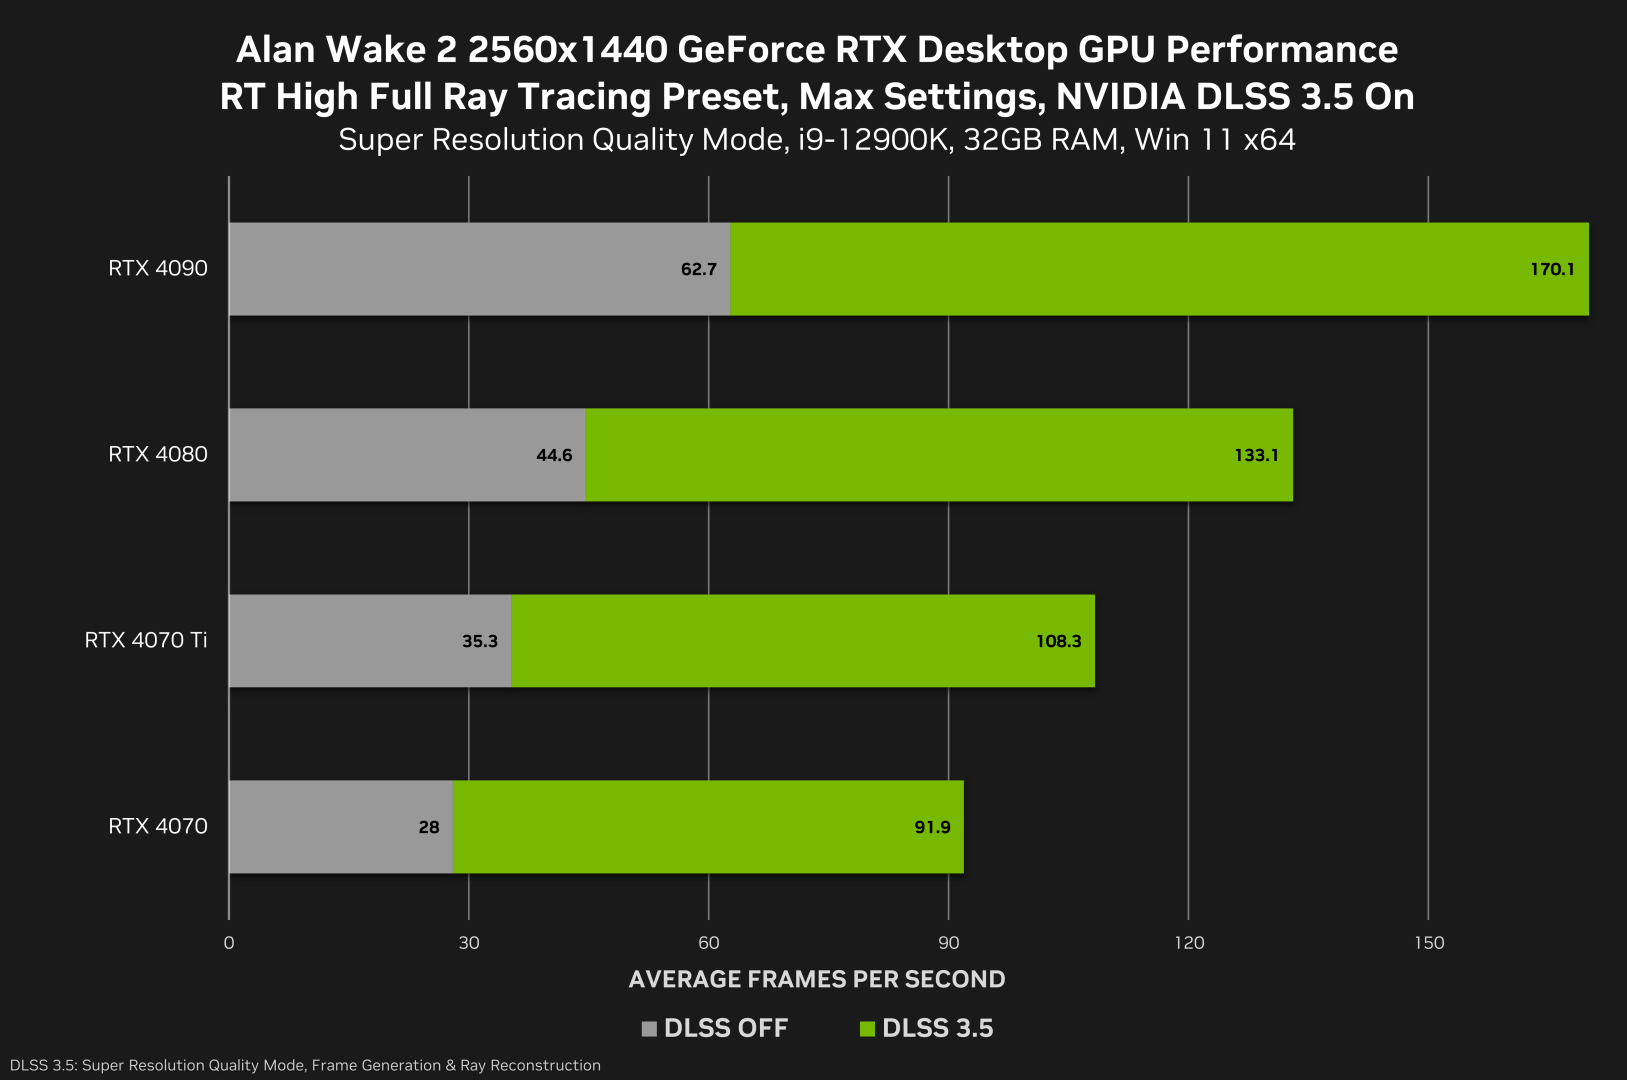 alan-wake-2-geforce-rtx-2560x1440-rt-high-nvidia-dlss-3-5-desktop-gpu-performance.png